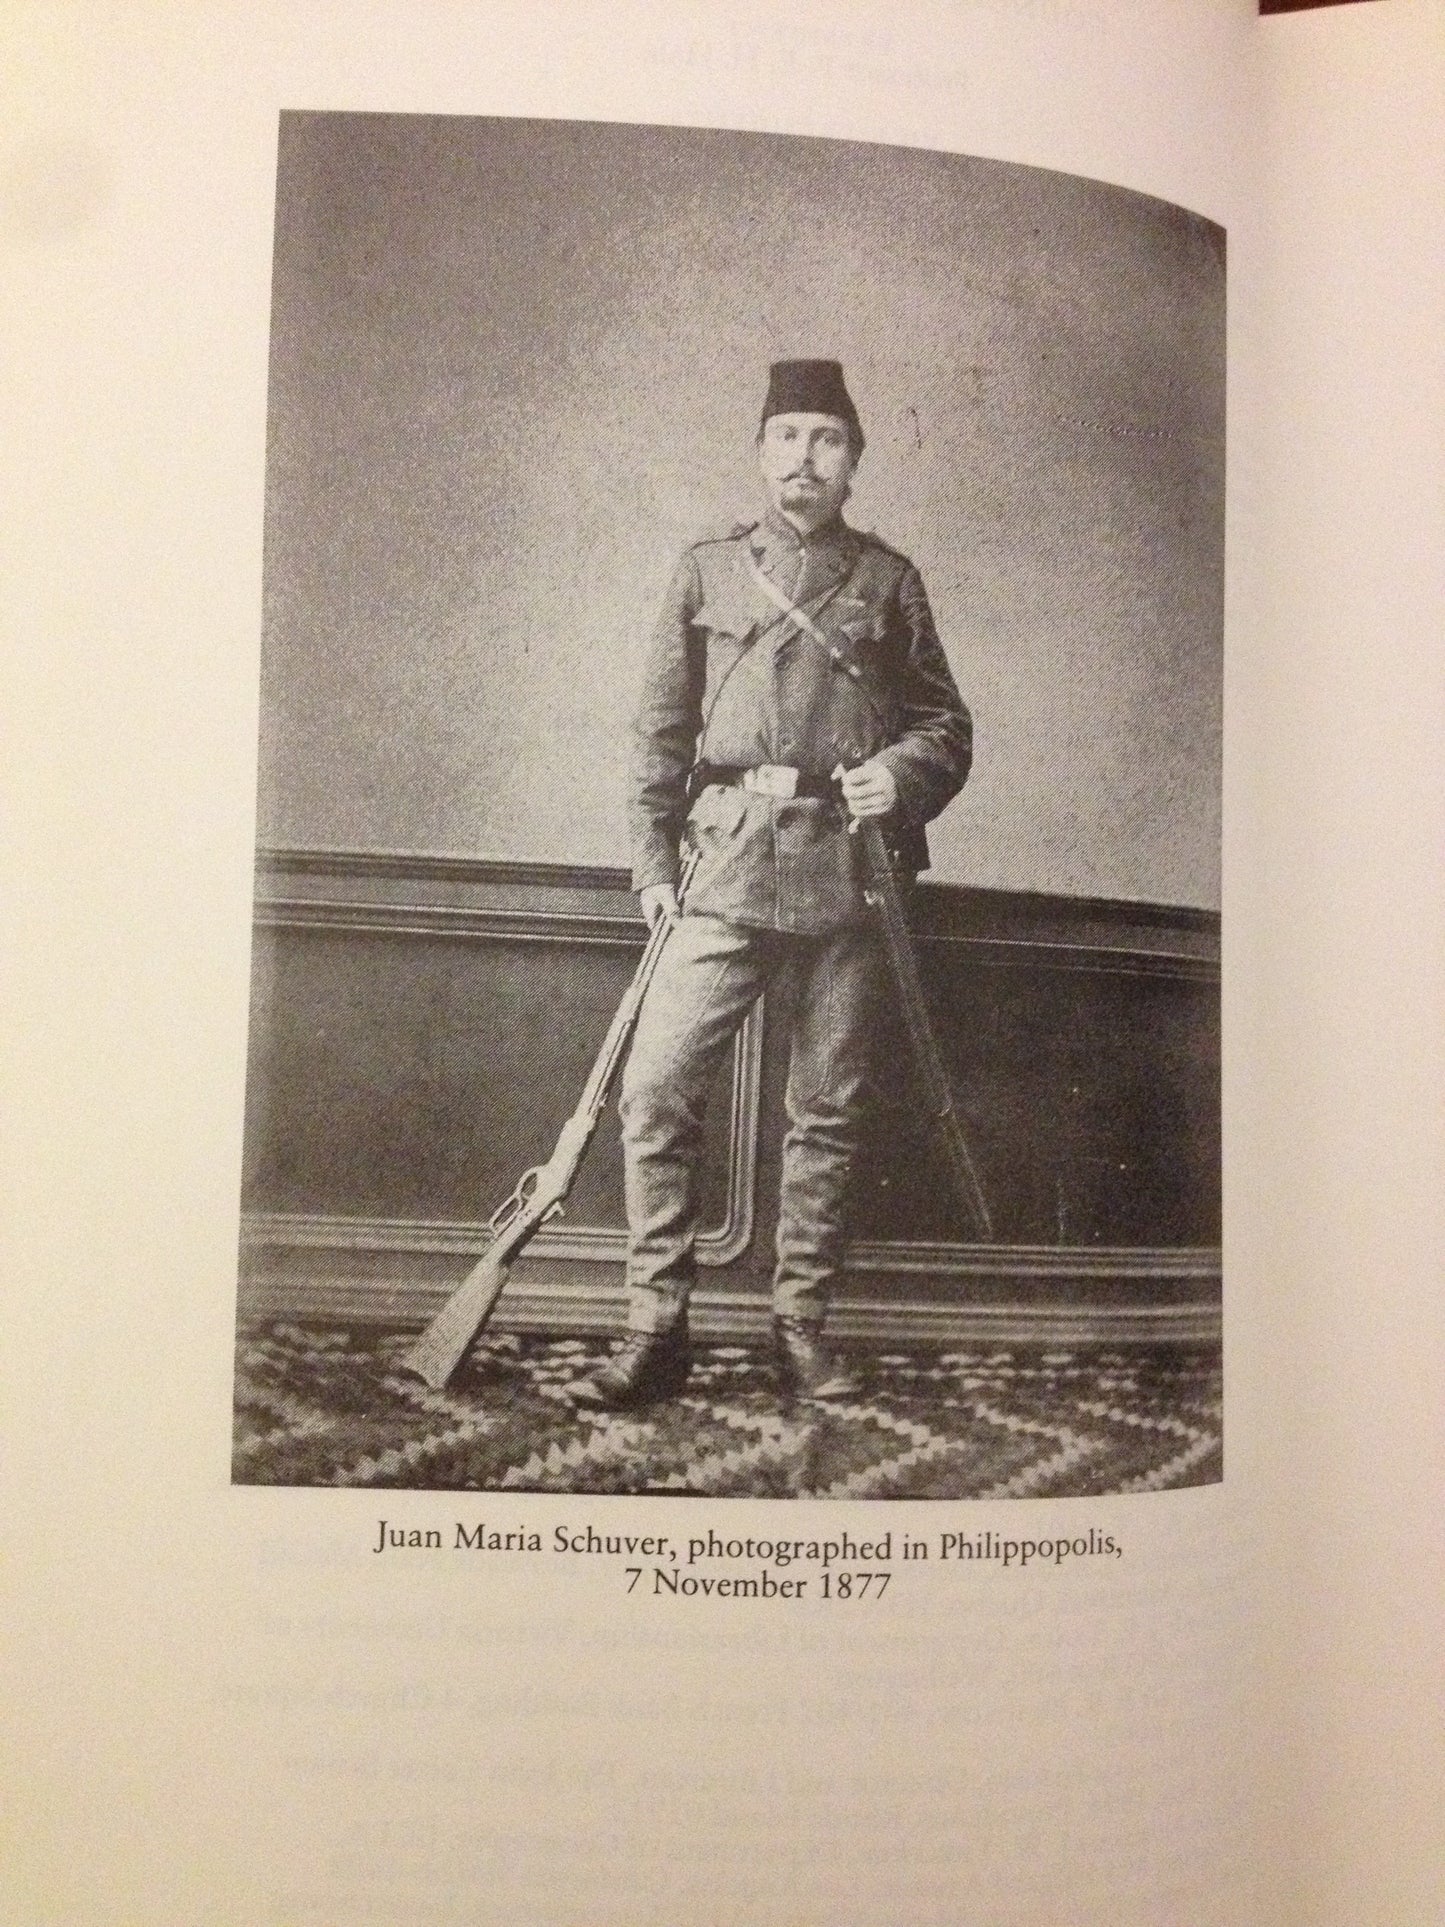 JUAN MARIA SCHUVER'S TRAVELS EAST AFRICA 1880 - WENDY JAMES